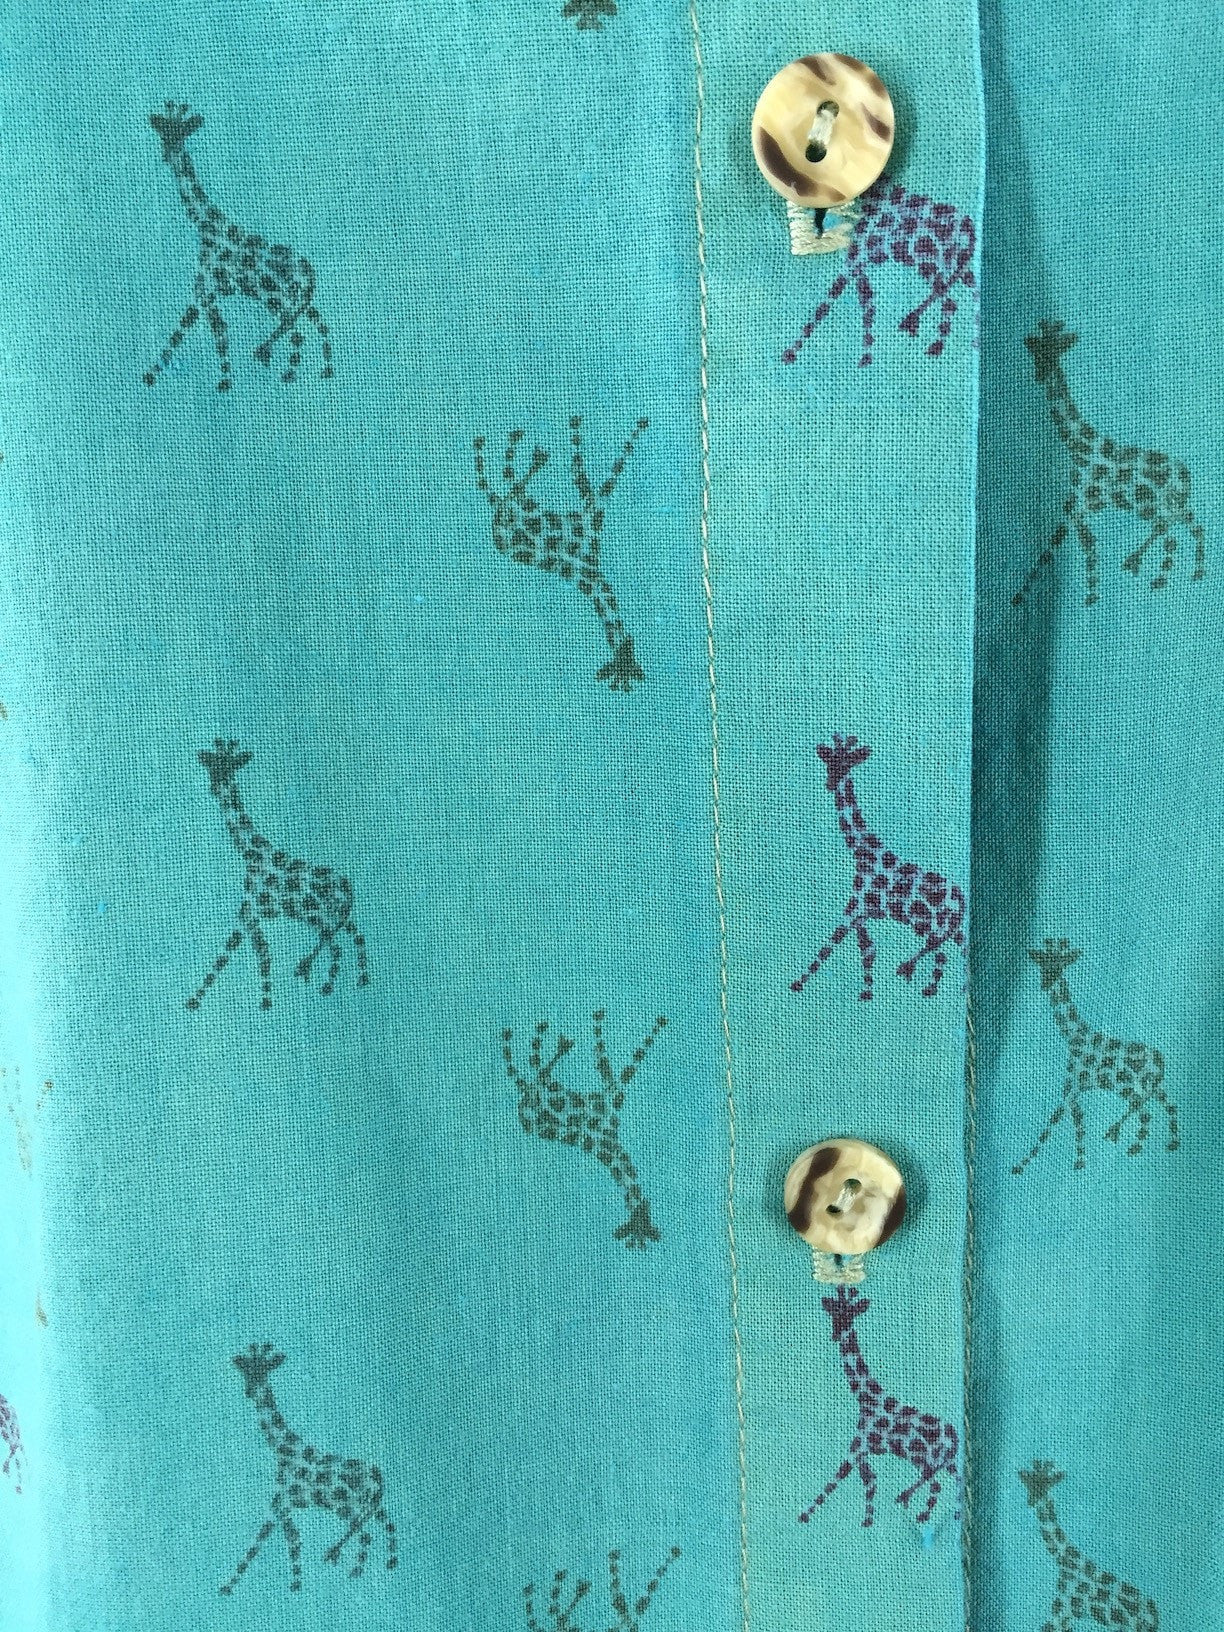 Vintage Safari Shirt / Giraffe Novelty Print - ThisBlueBird